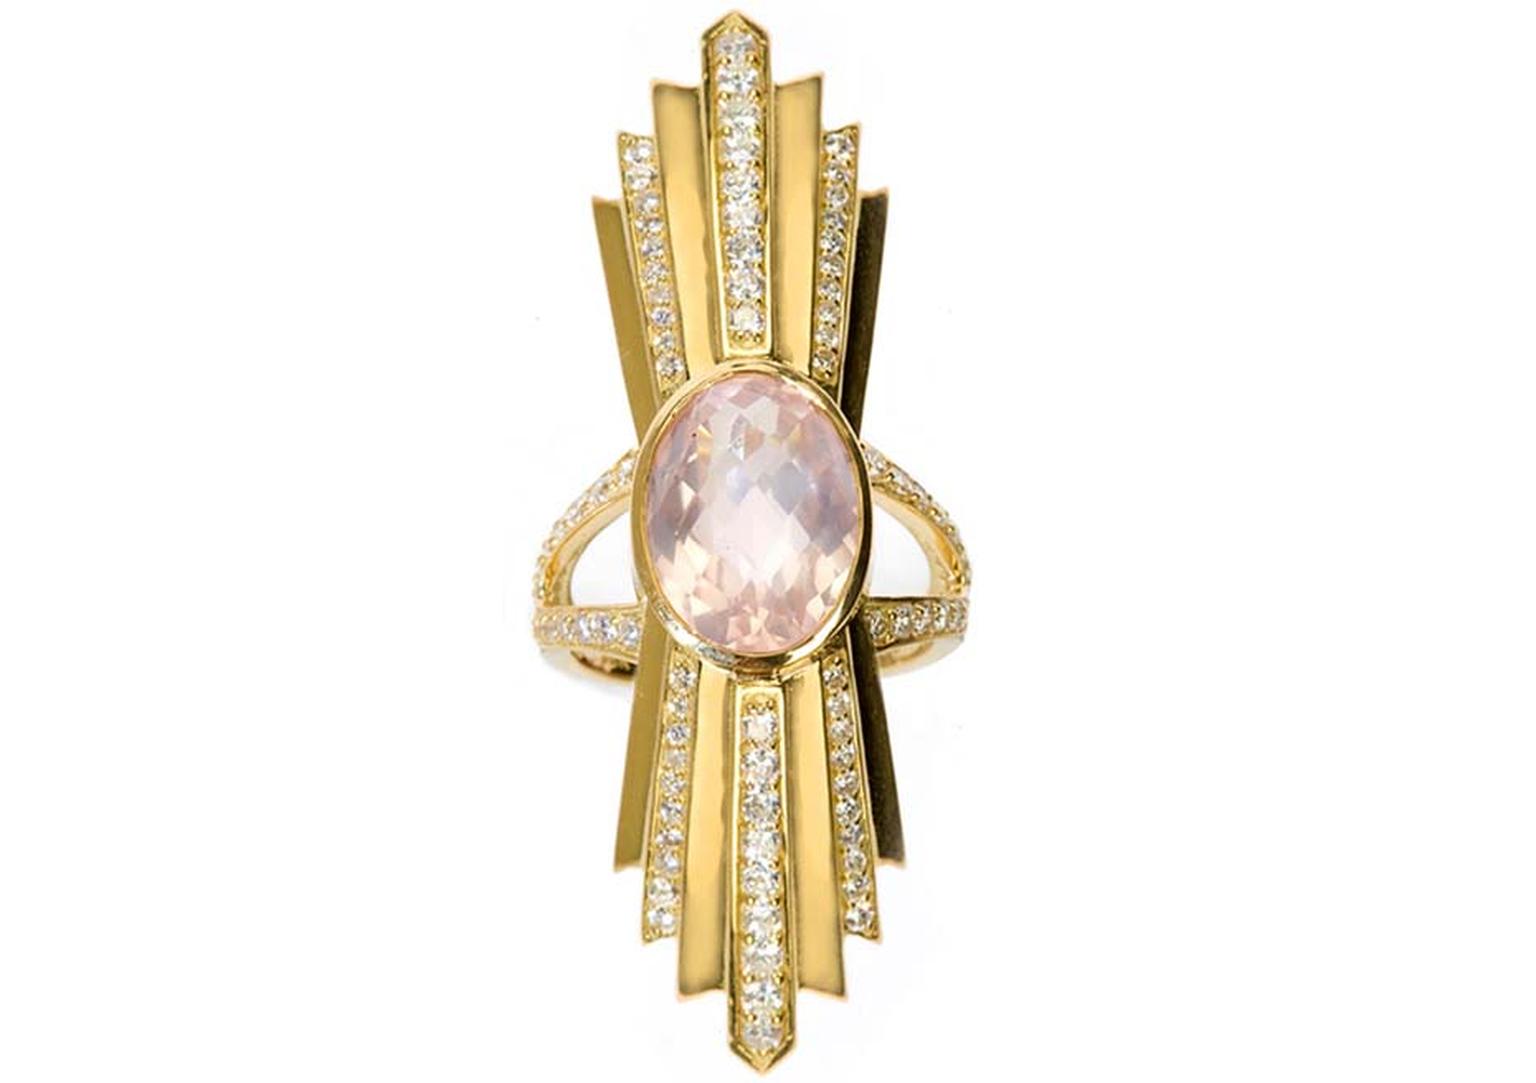 Deborah Pagani gold Talula ring featuring diamonds and rose quartz ($6,224).